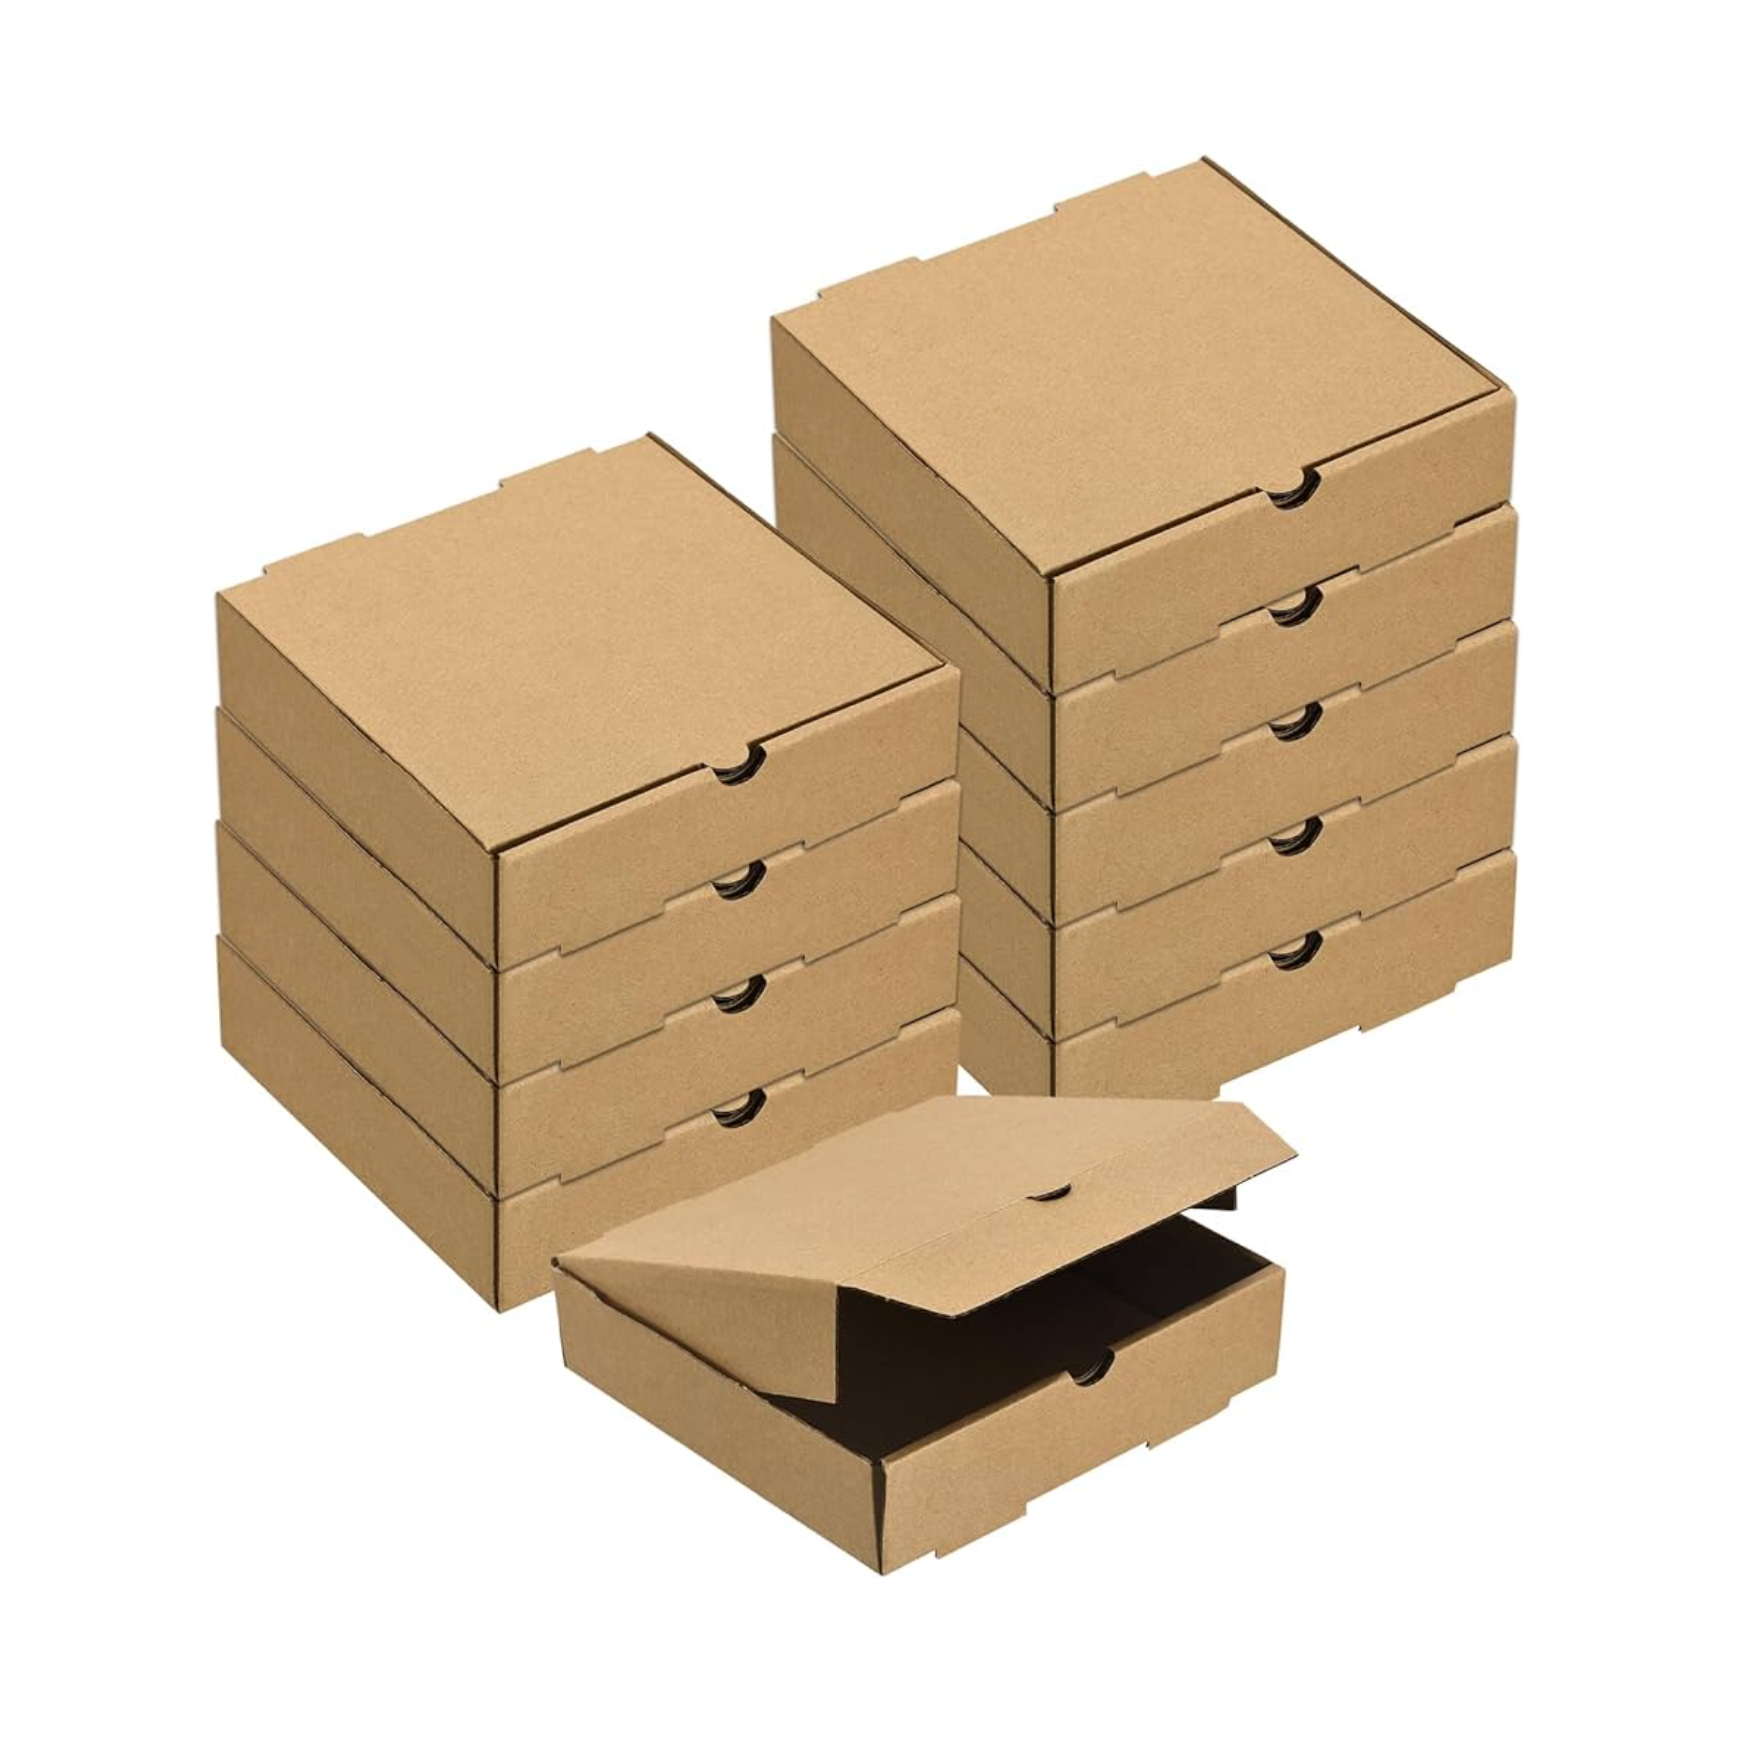 12 x 12 Inch Corrugated Cardboard Pizza Boxes